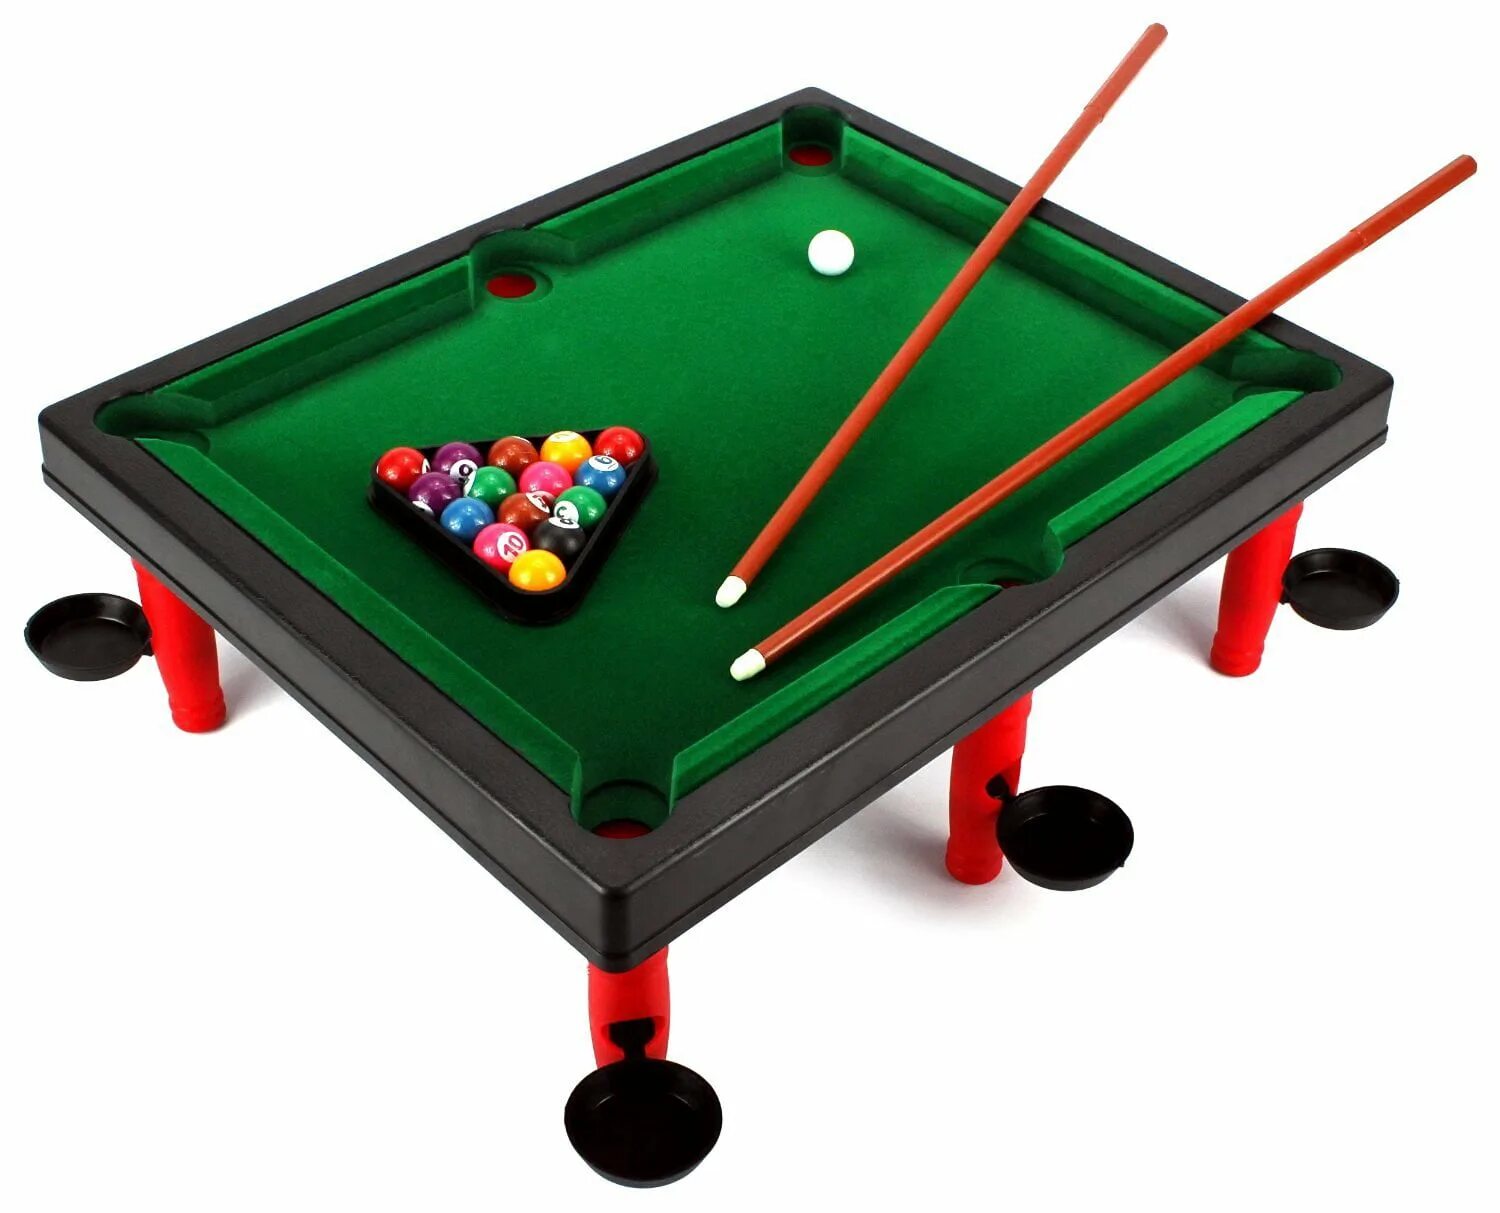 Бильярд мини пул 1700. Billiard Pool Table. Биллиард снукер. Deluxe Snooker Pool Set 06.04 2020 детская. На неподвижный бильярдный